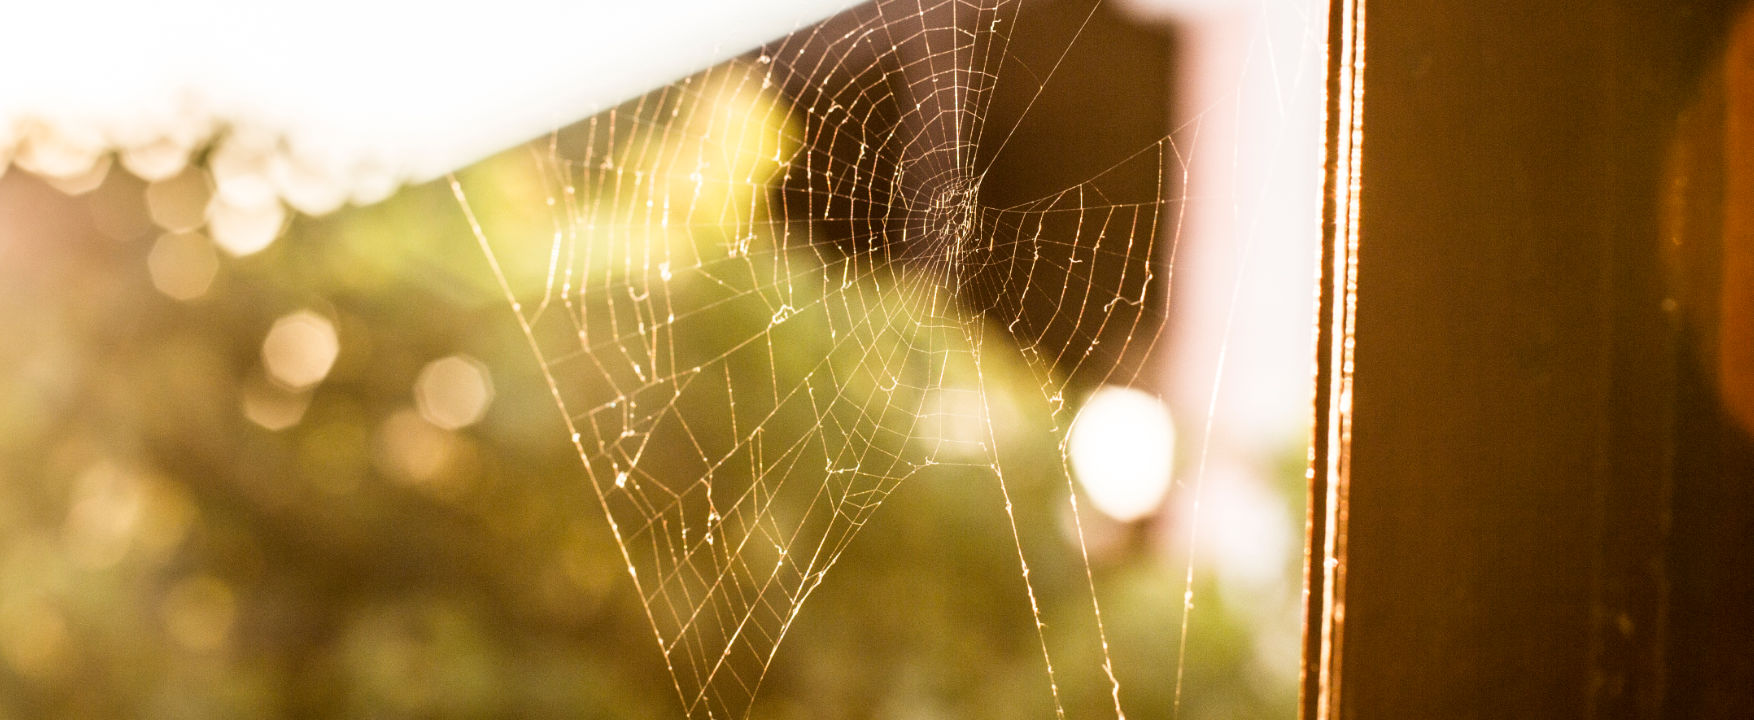 spider pest control Adelaide exterminator - spider webs around the home